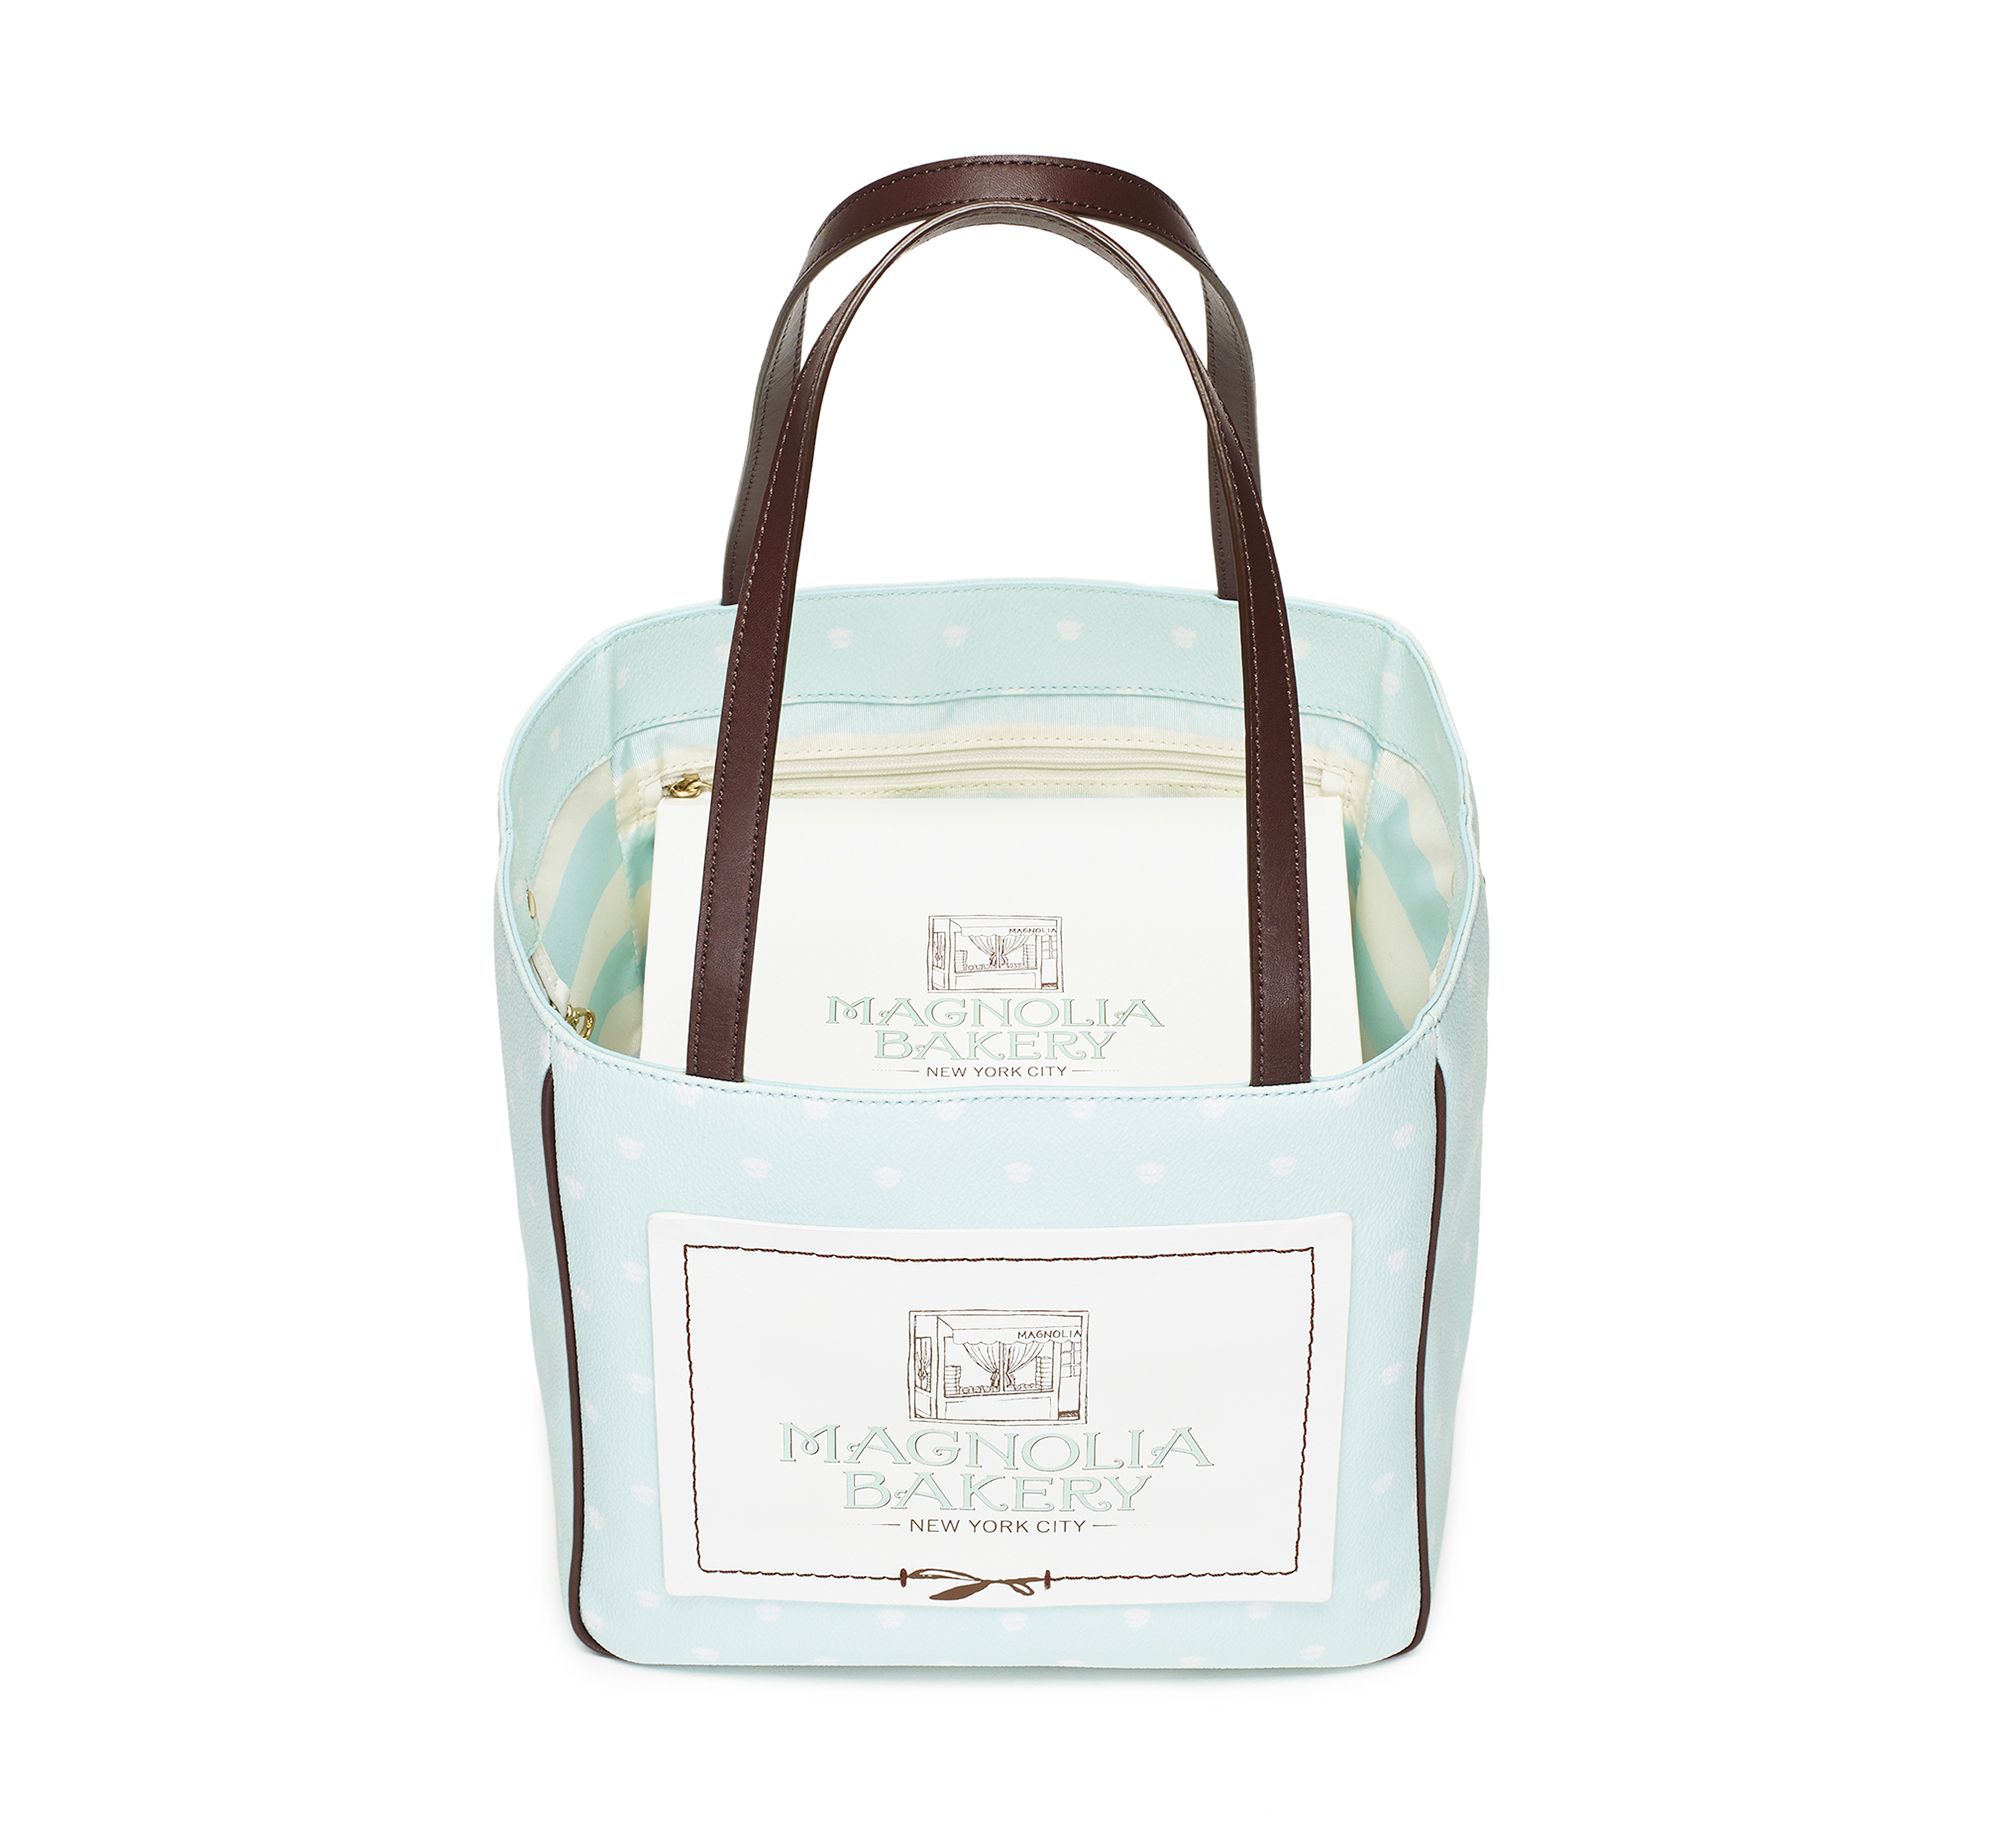 New Kate Spade New York Handbags - Magnolia Bakery Purses 